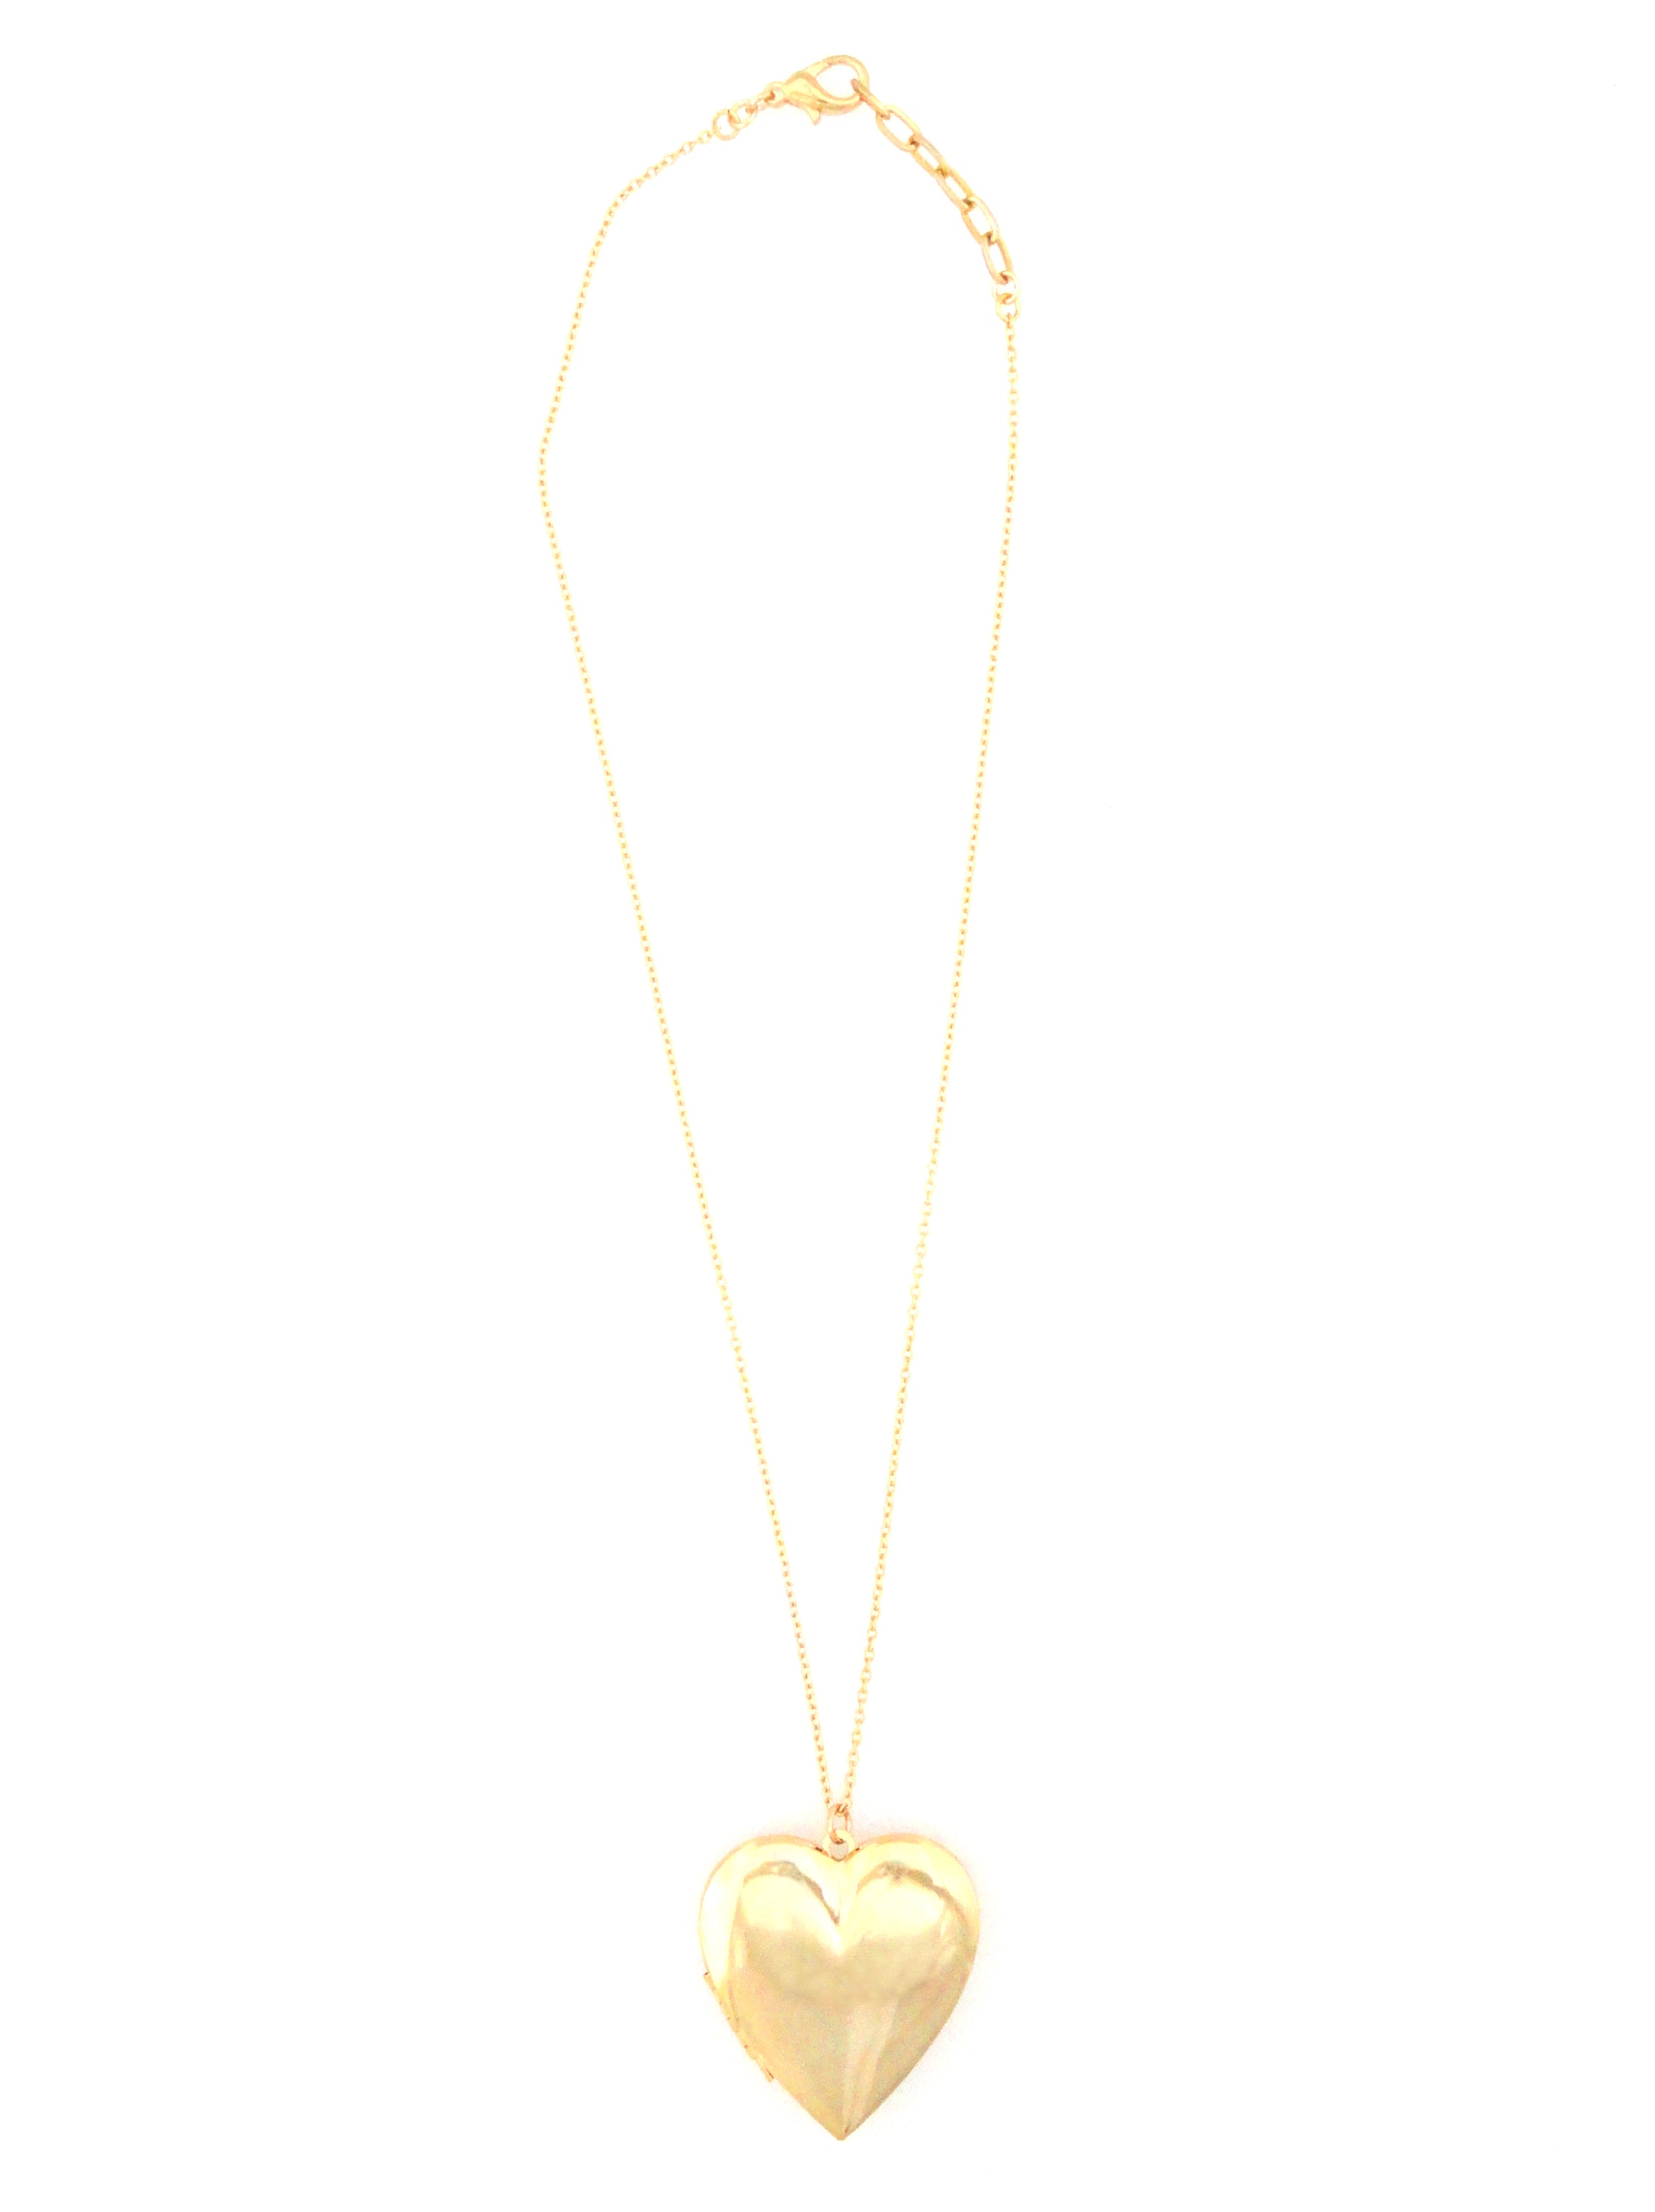 Gold heart locket necklace